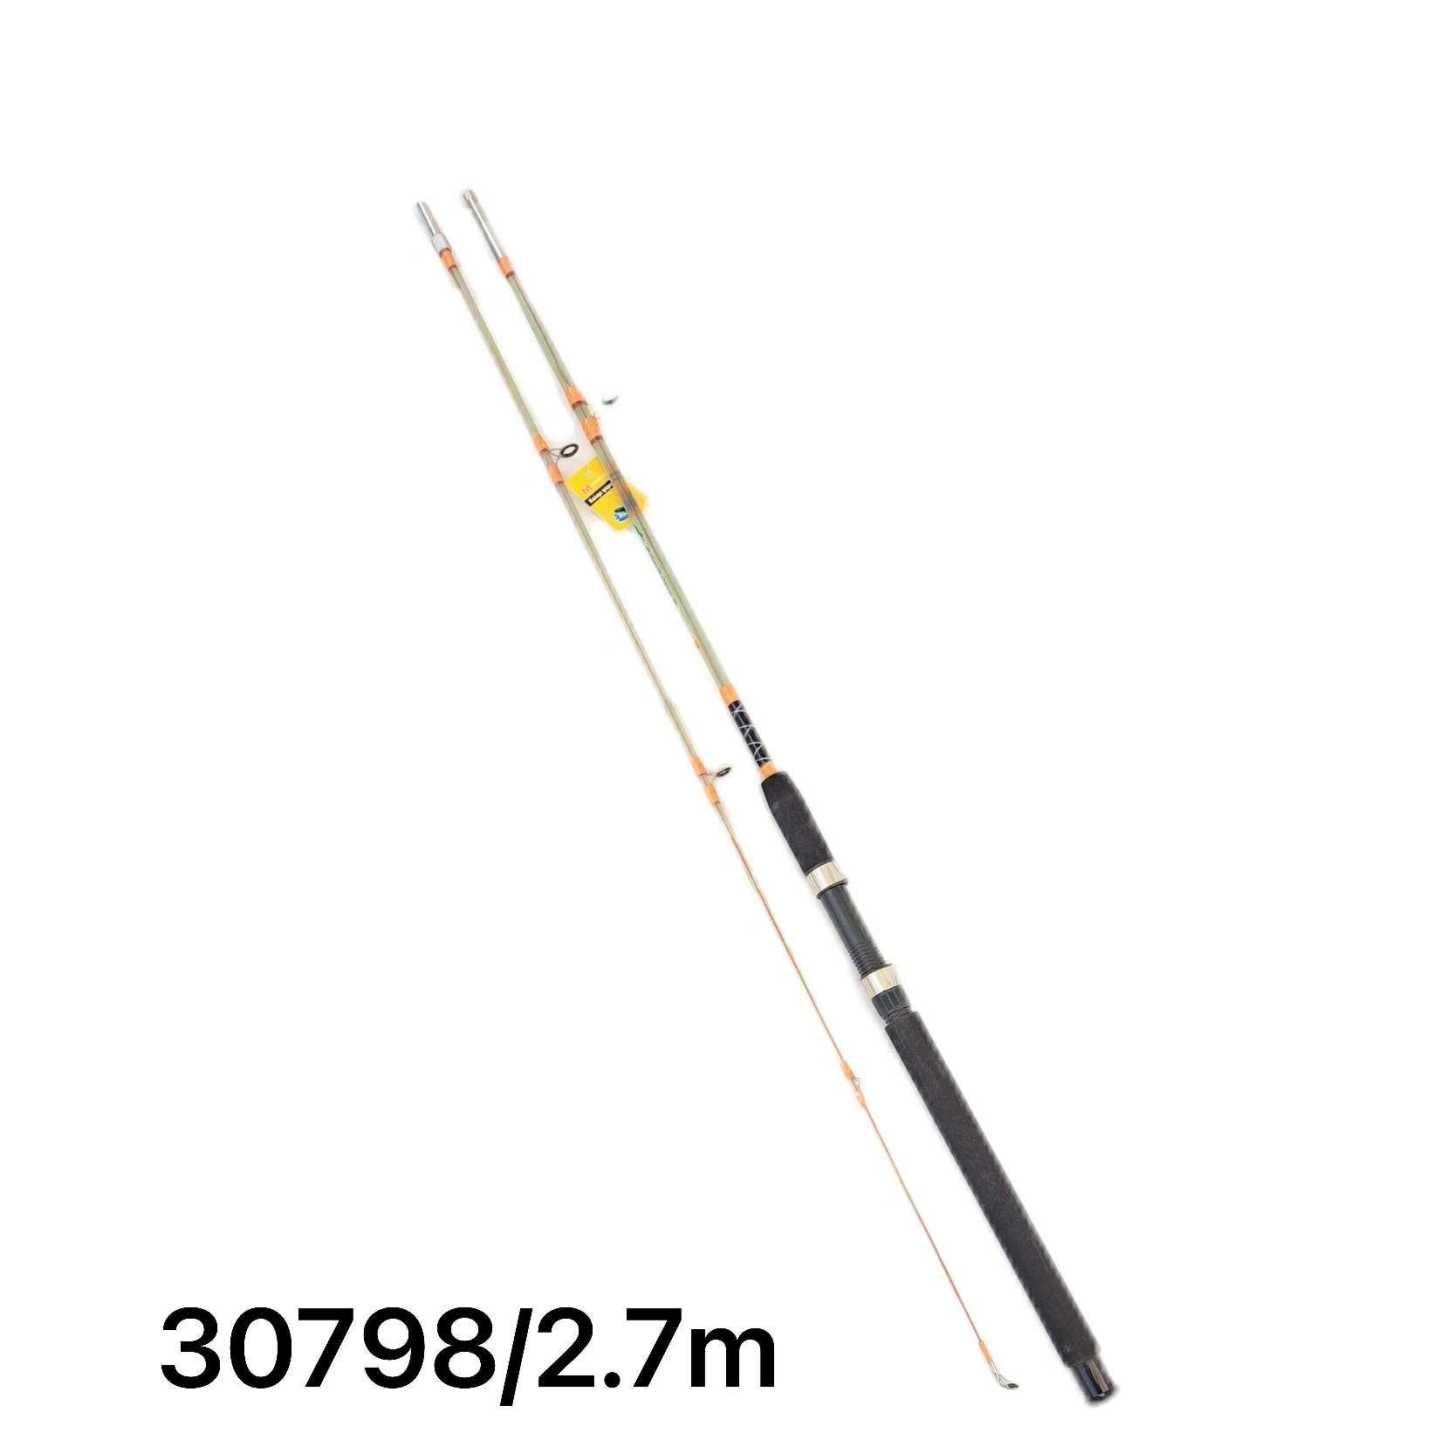 Fishing rod - Split - 2.7m - 30798